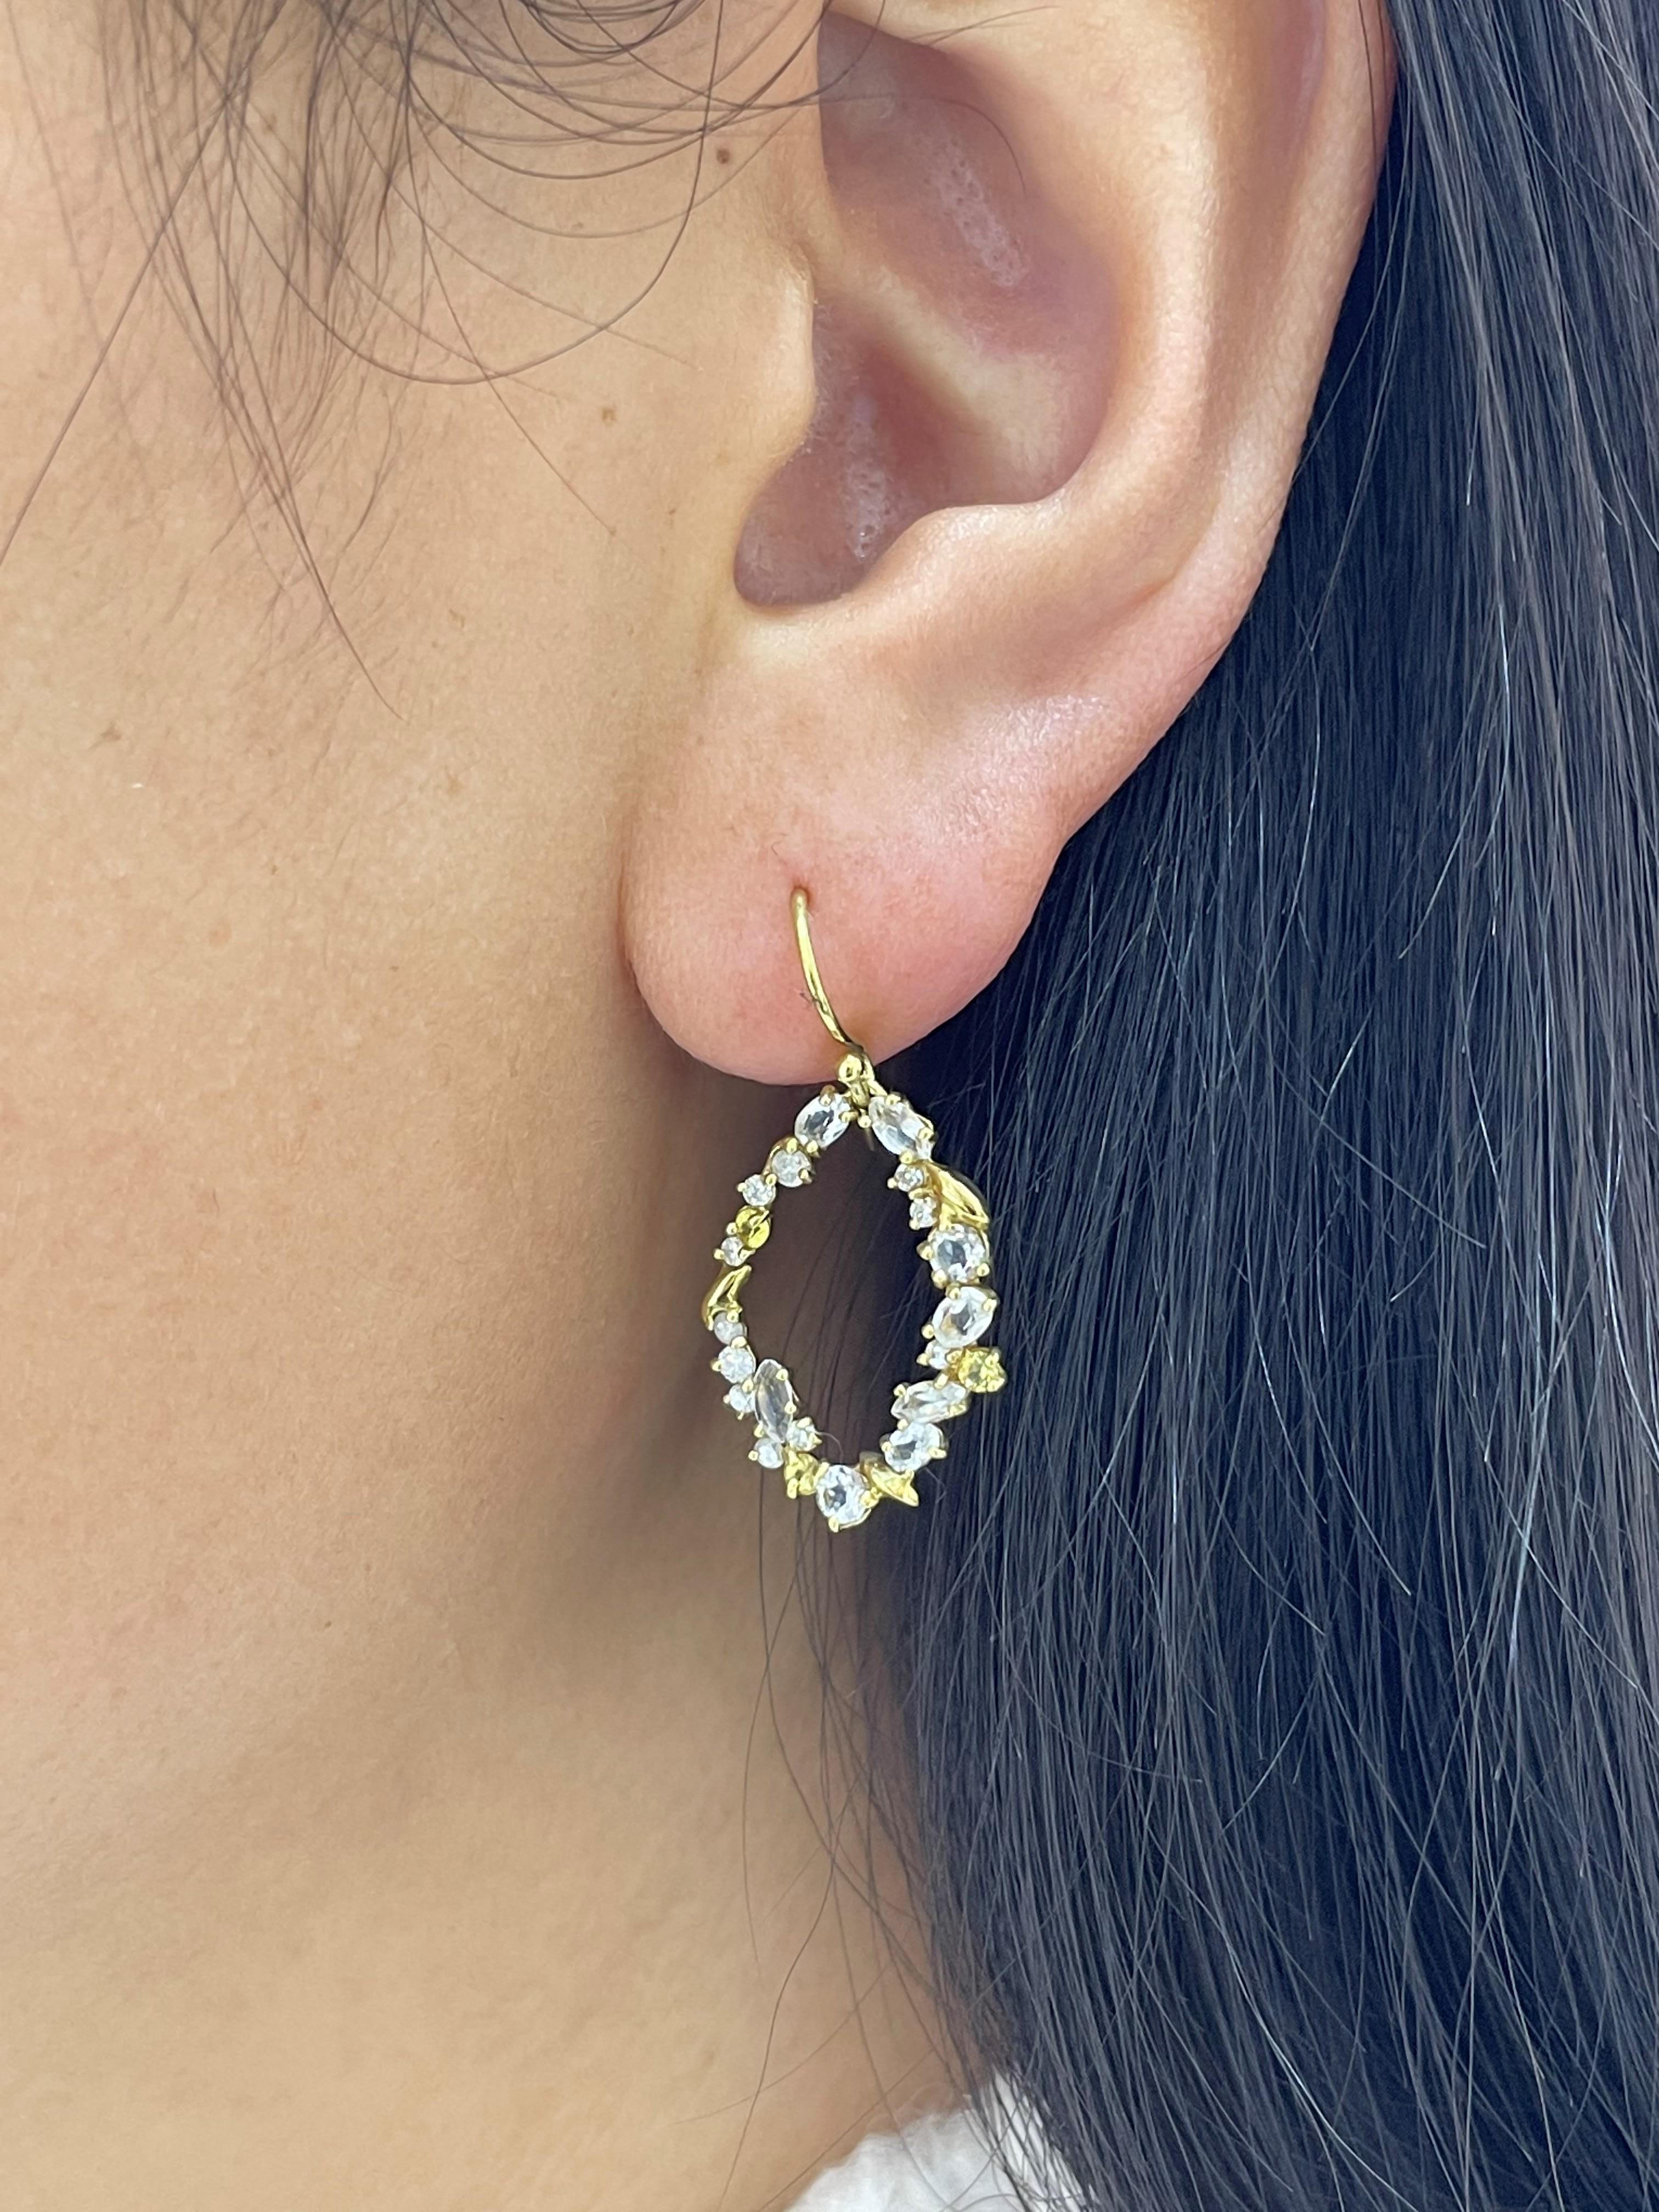 alexis bittar earrings